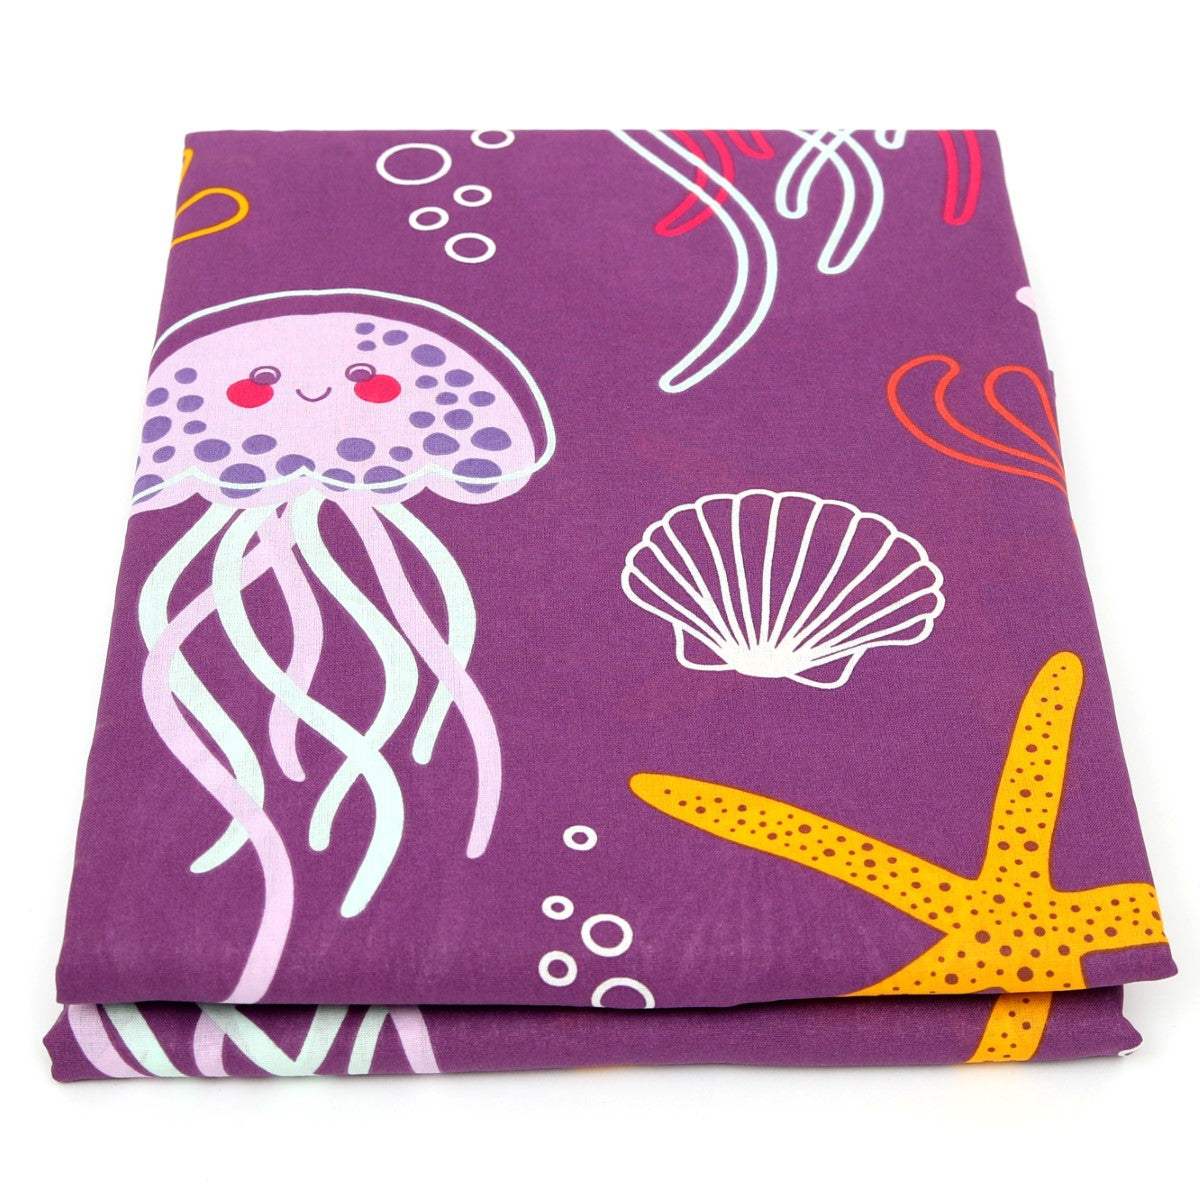 Jelly fish Single Bed Sheet 68x96"